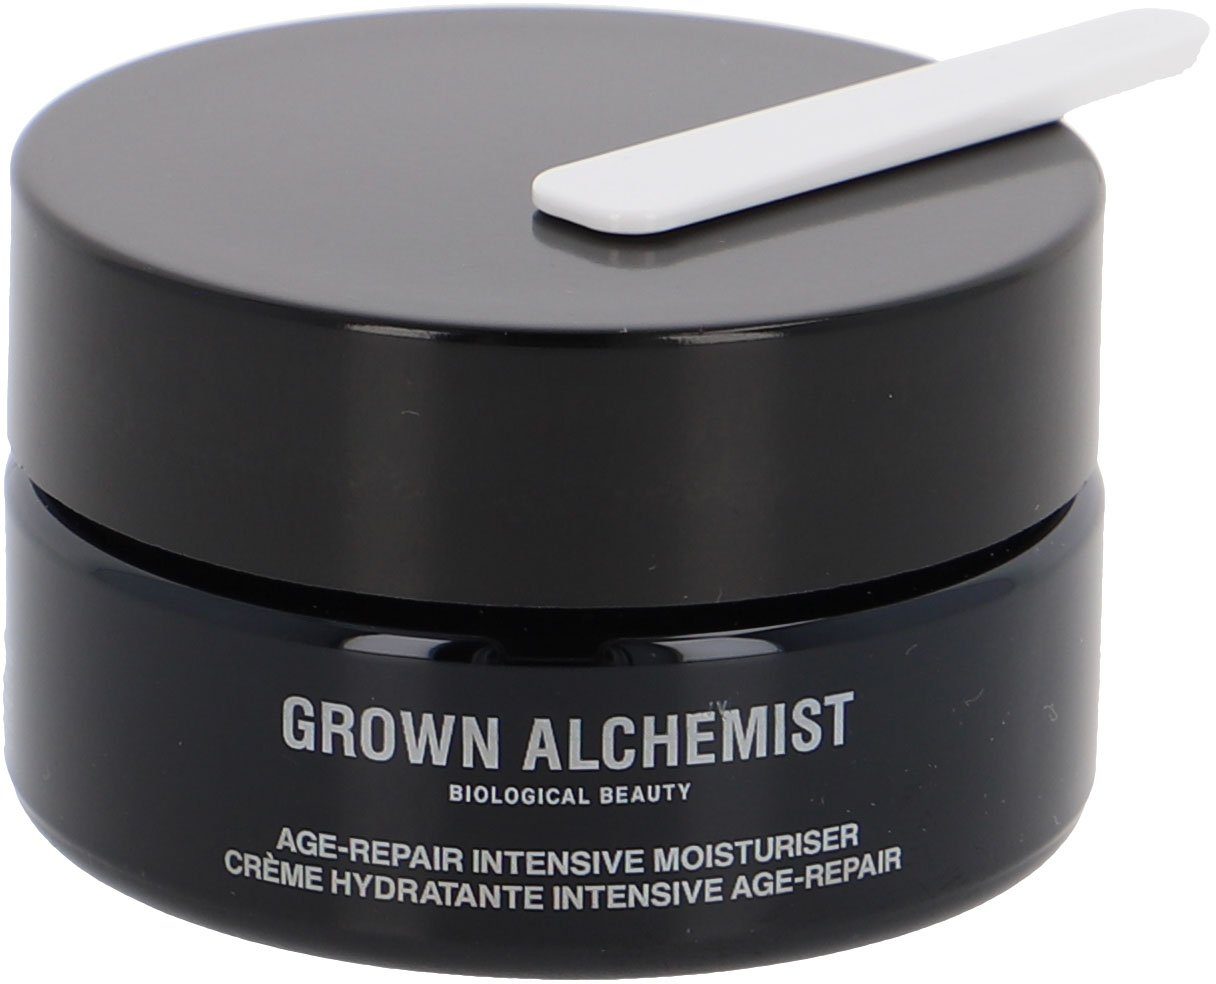 GROWN ALCHEMIST Anti-Aging-Creme Age-Repair Intensive Moisturiser, White  Tea Extract, Phyto-Peptide, Gesichtspflege